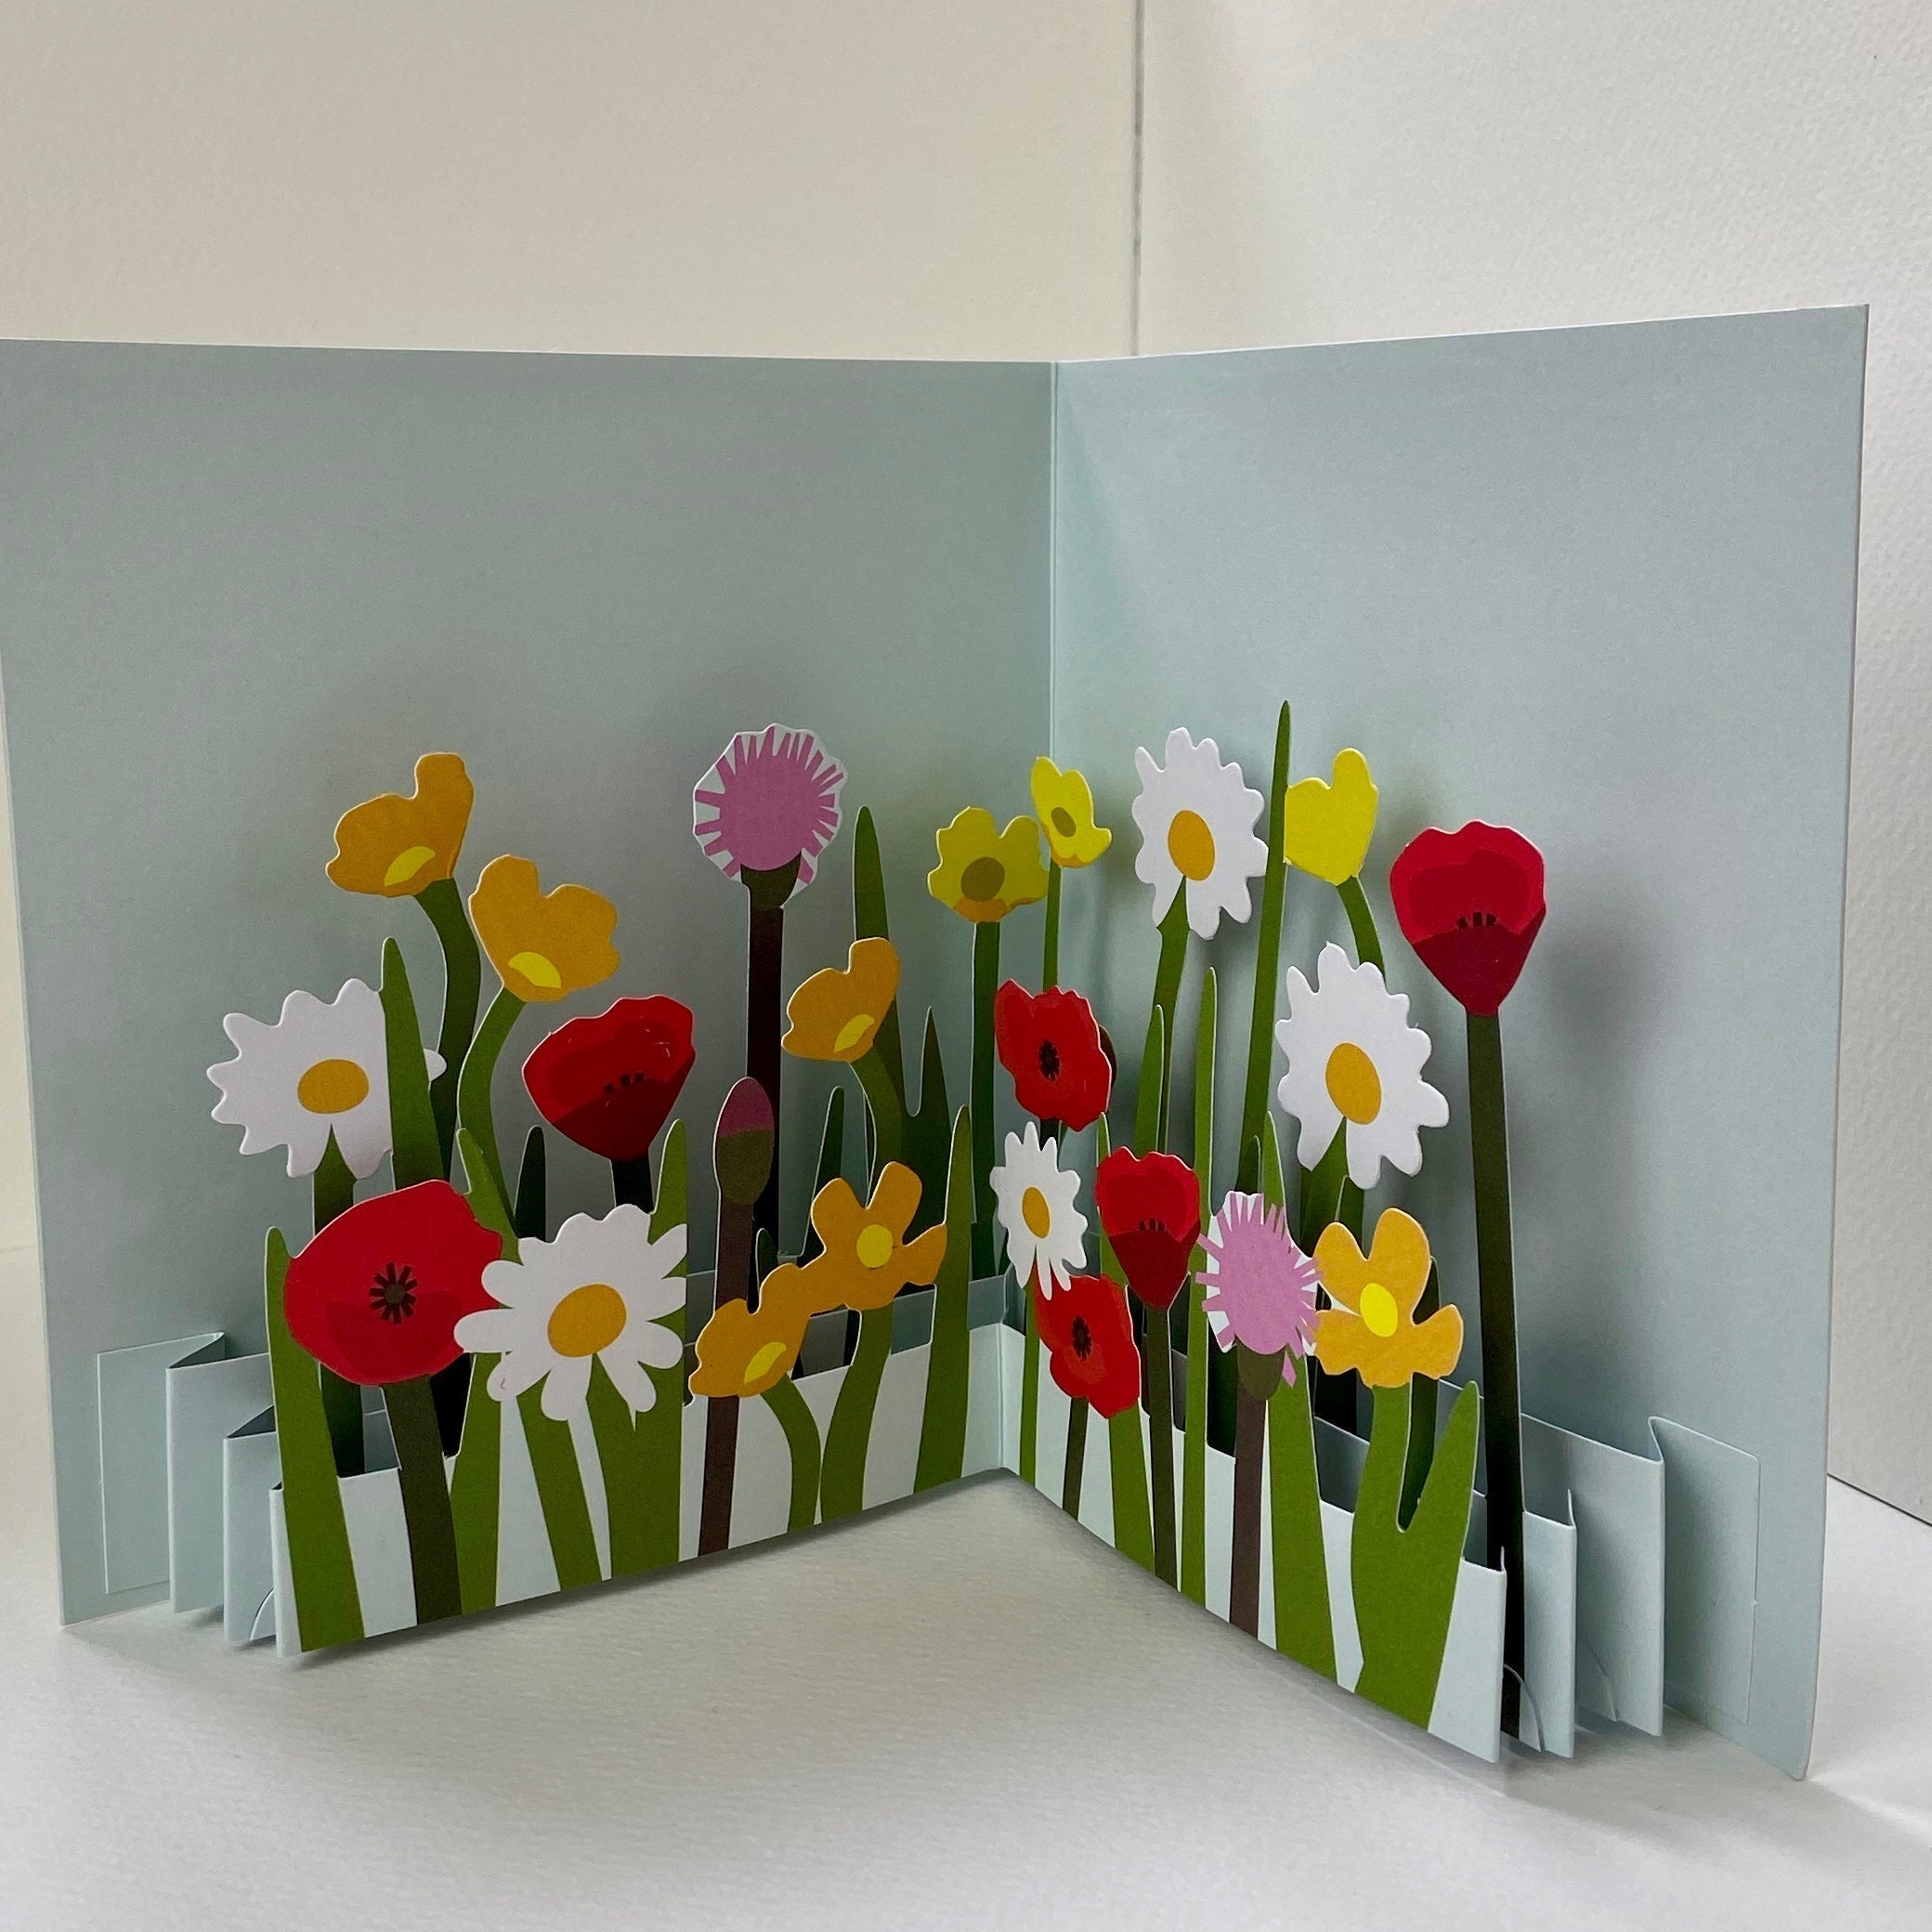 Mixed Wild Flowers Pop up Card - The Nancy Smillie Shop - Art, Jewellery & Designer Gifts Glasgow